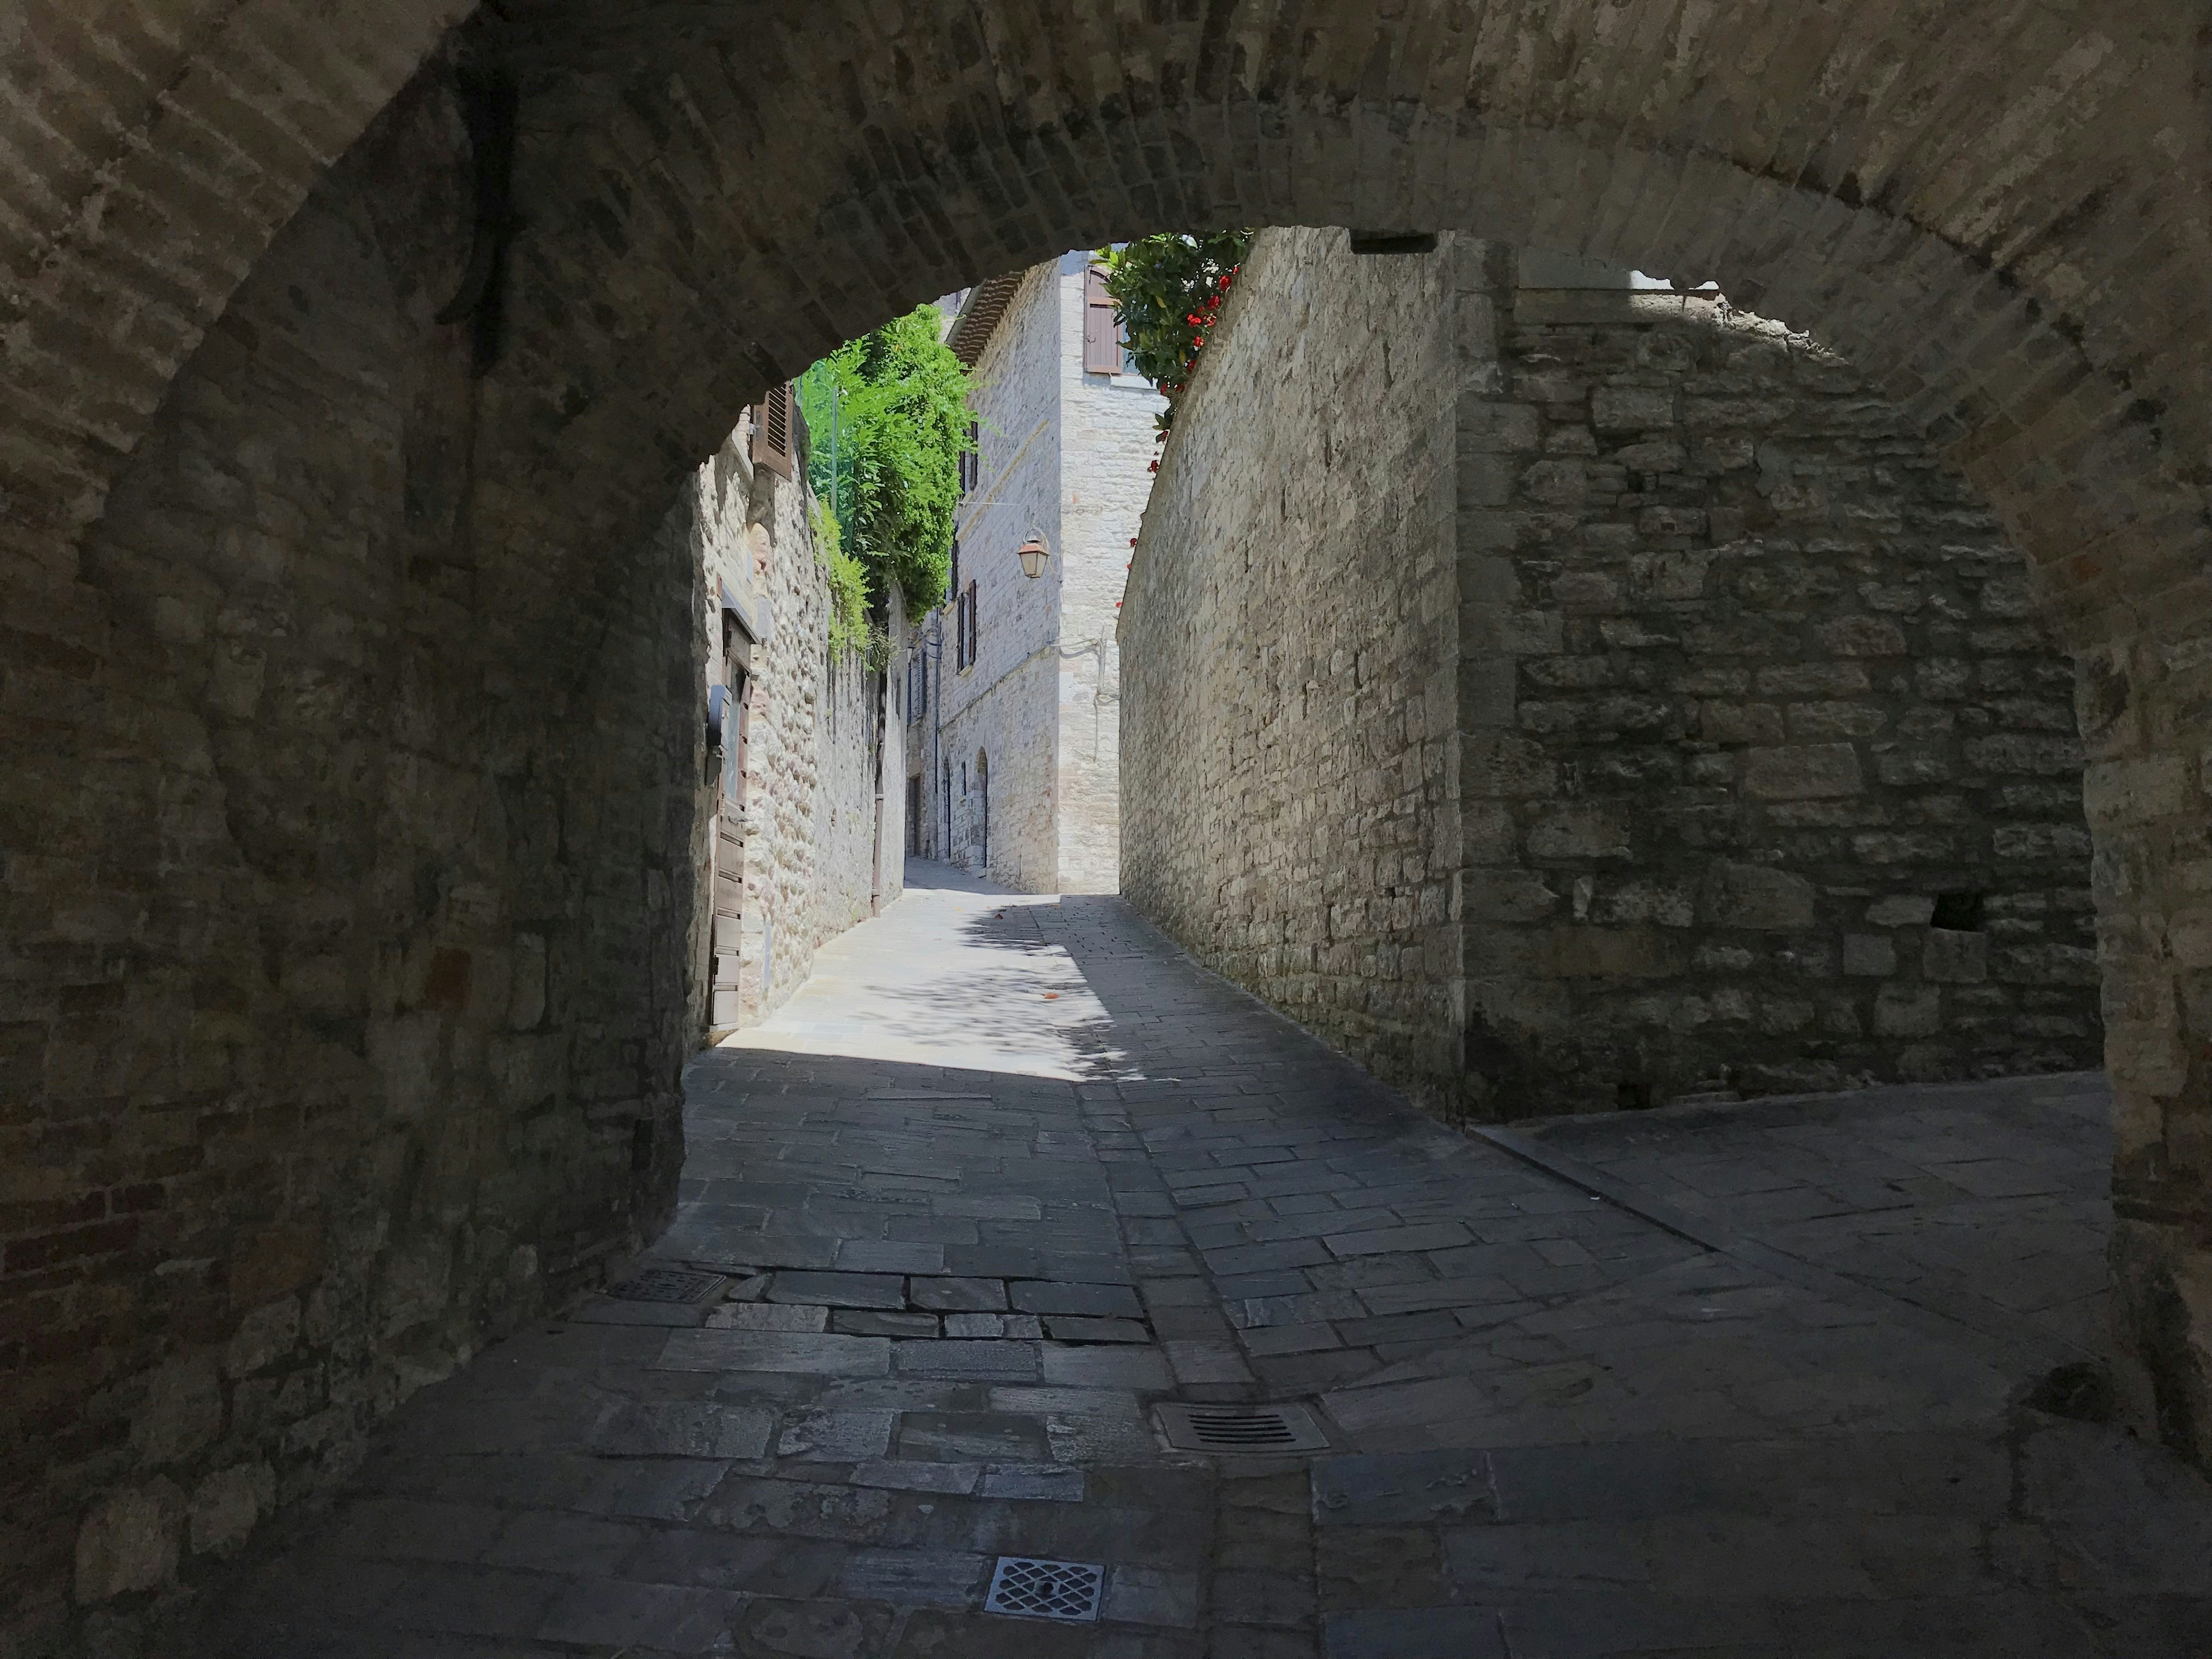 Streets of Gubbio, Italy